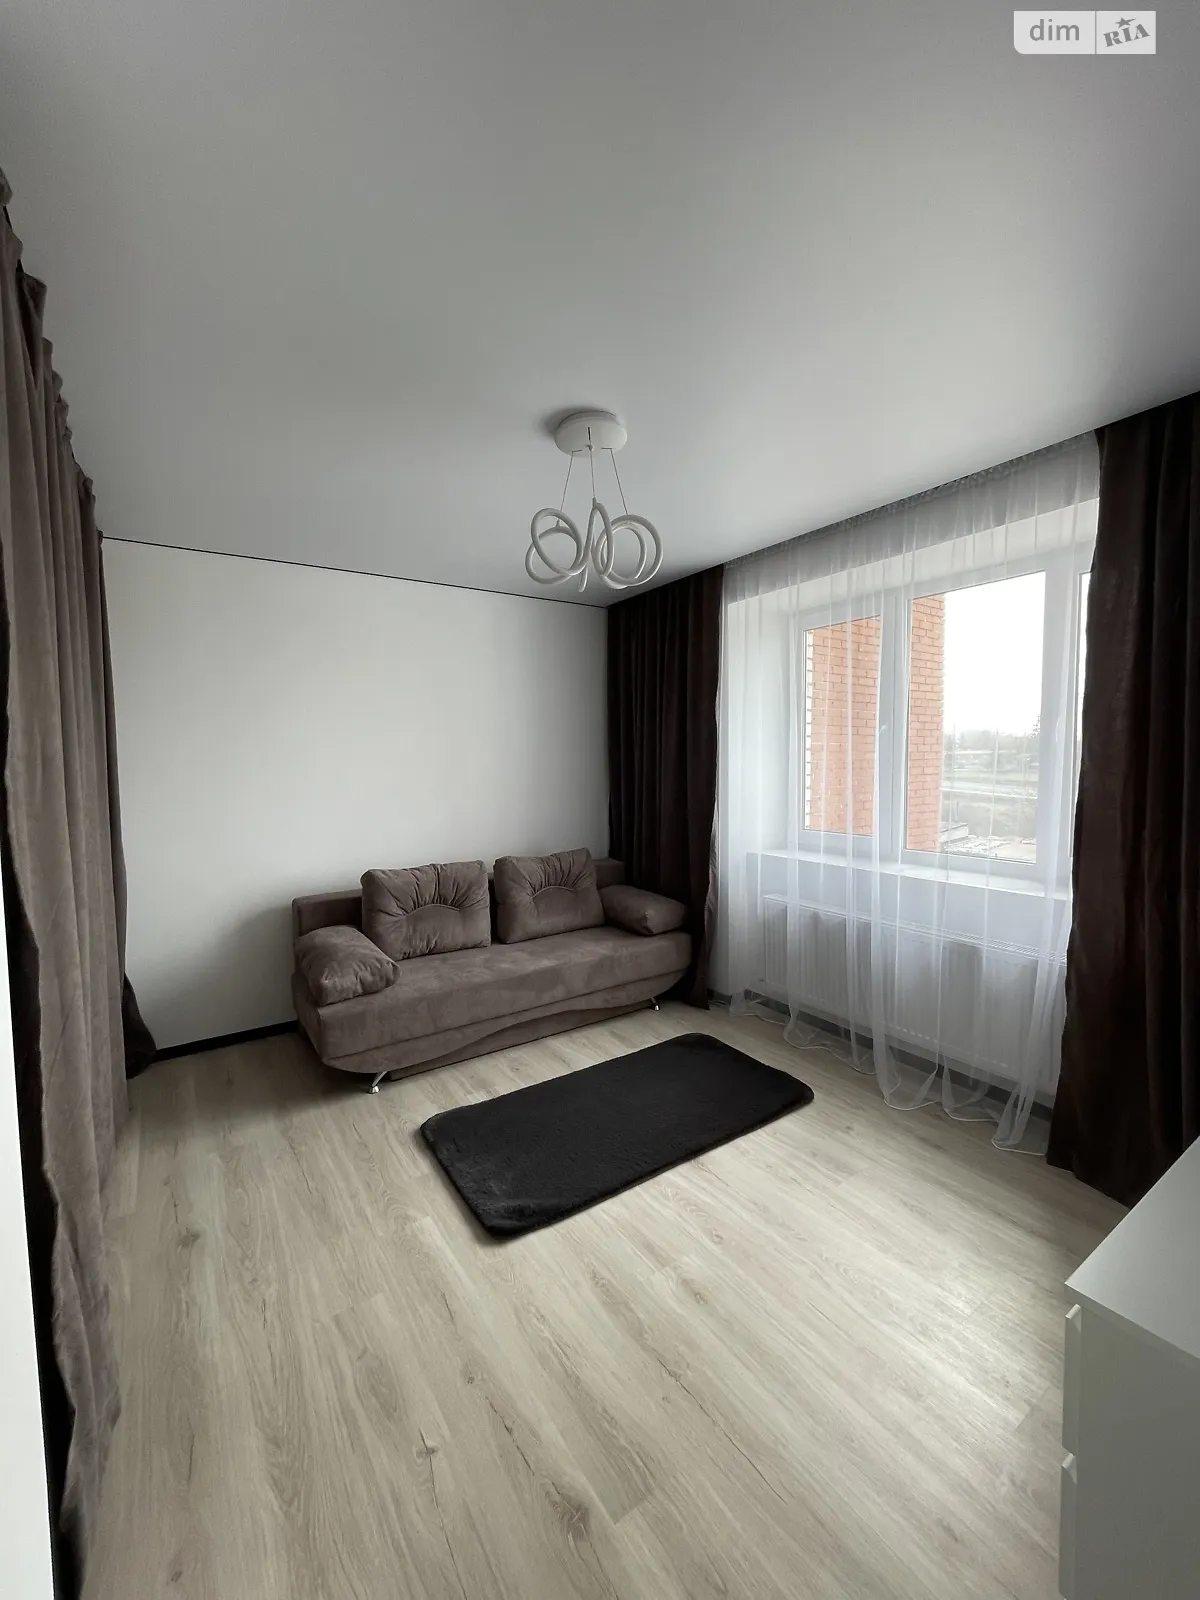 1-кімнатна квартира 39 кв. м у Тернополі, цена: 50000 $ - фото 1